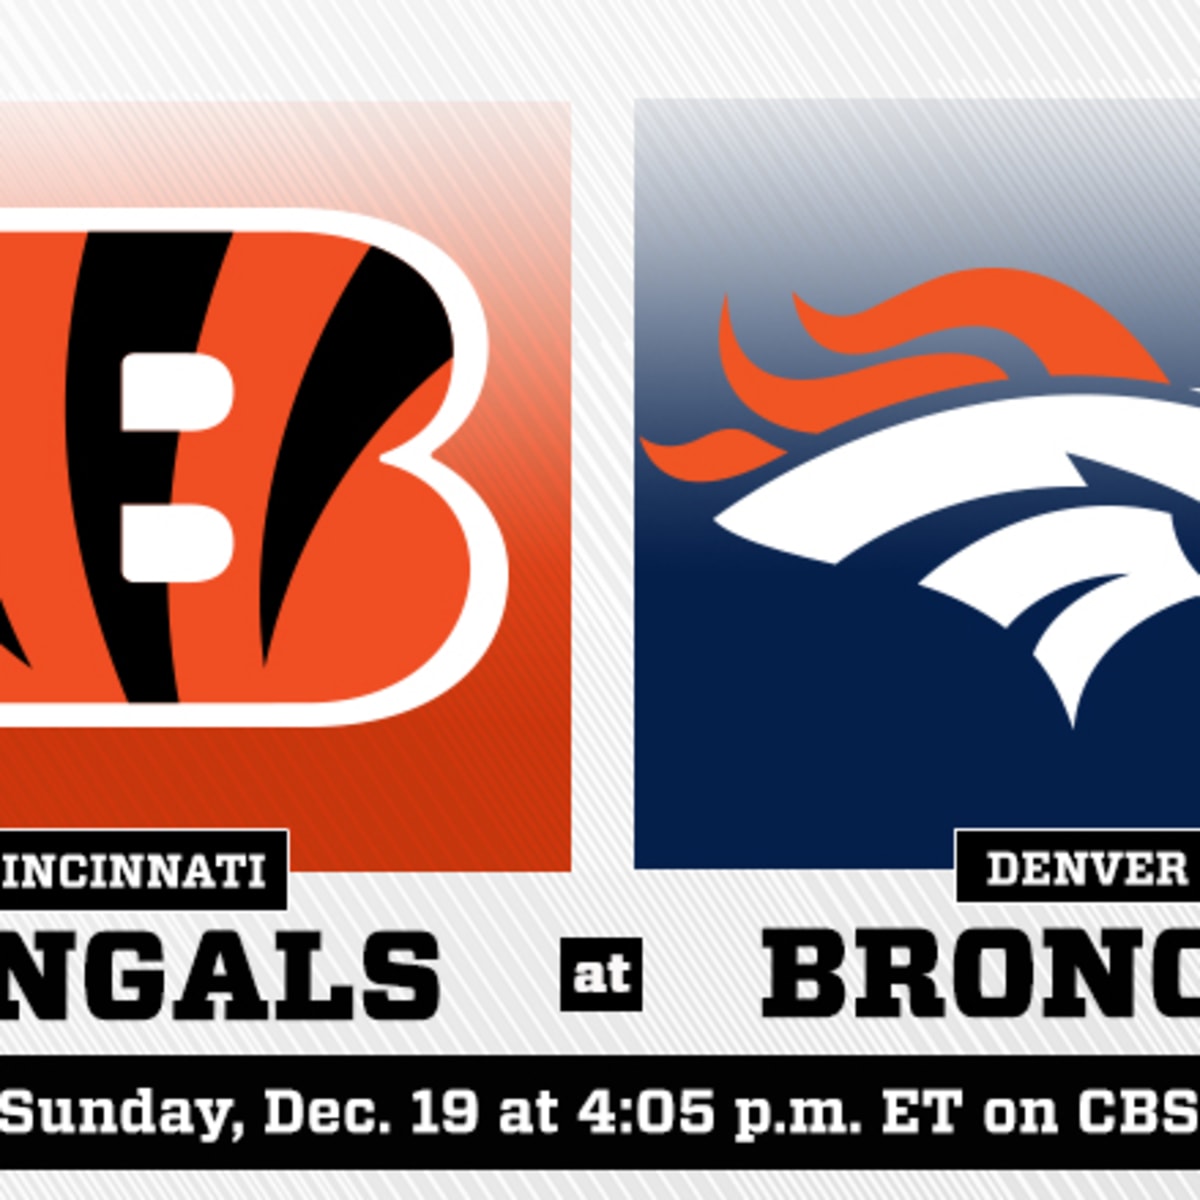 Cincinnati Bengals vs. Denver Broncos Prediction and Preview